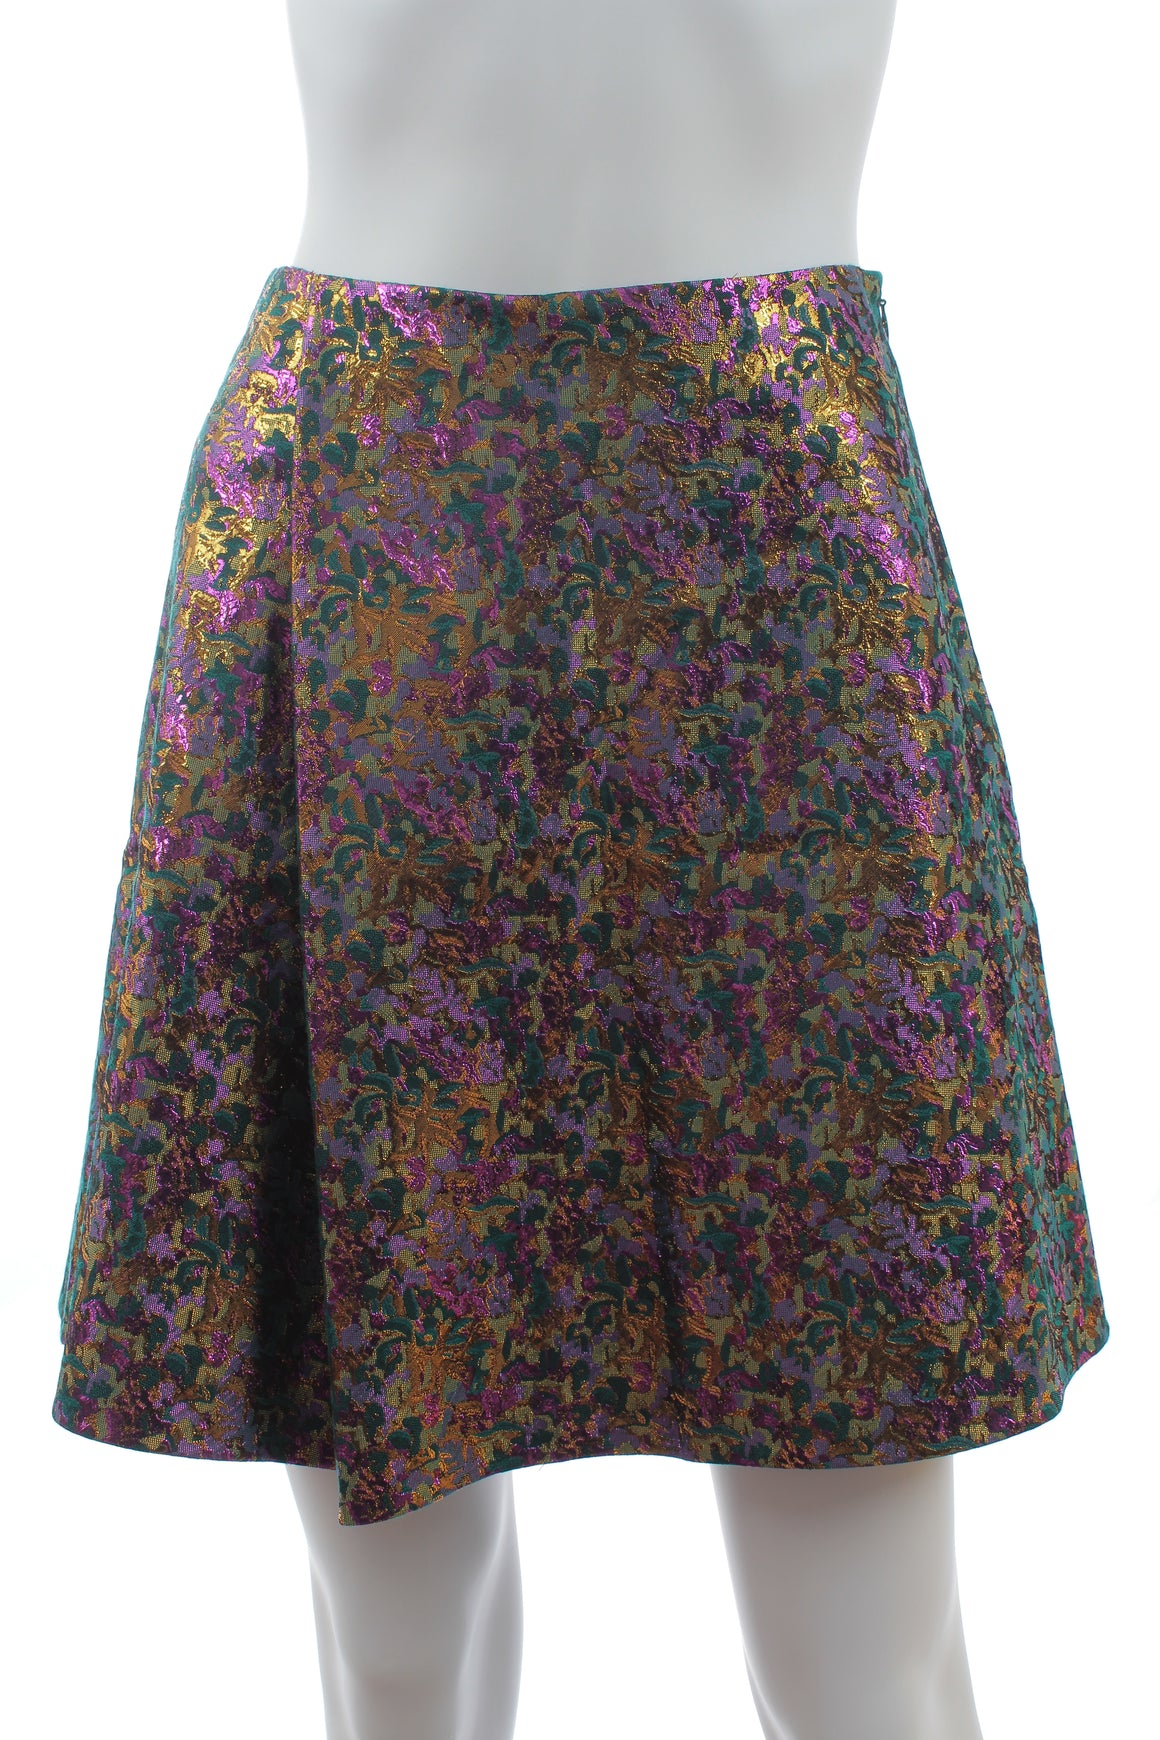 3.1 Phillip Lim Single Pleat Floral-Jacquard A-Line Mini Skirt